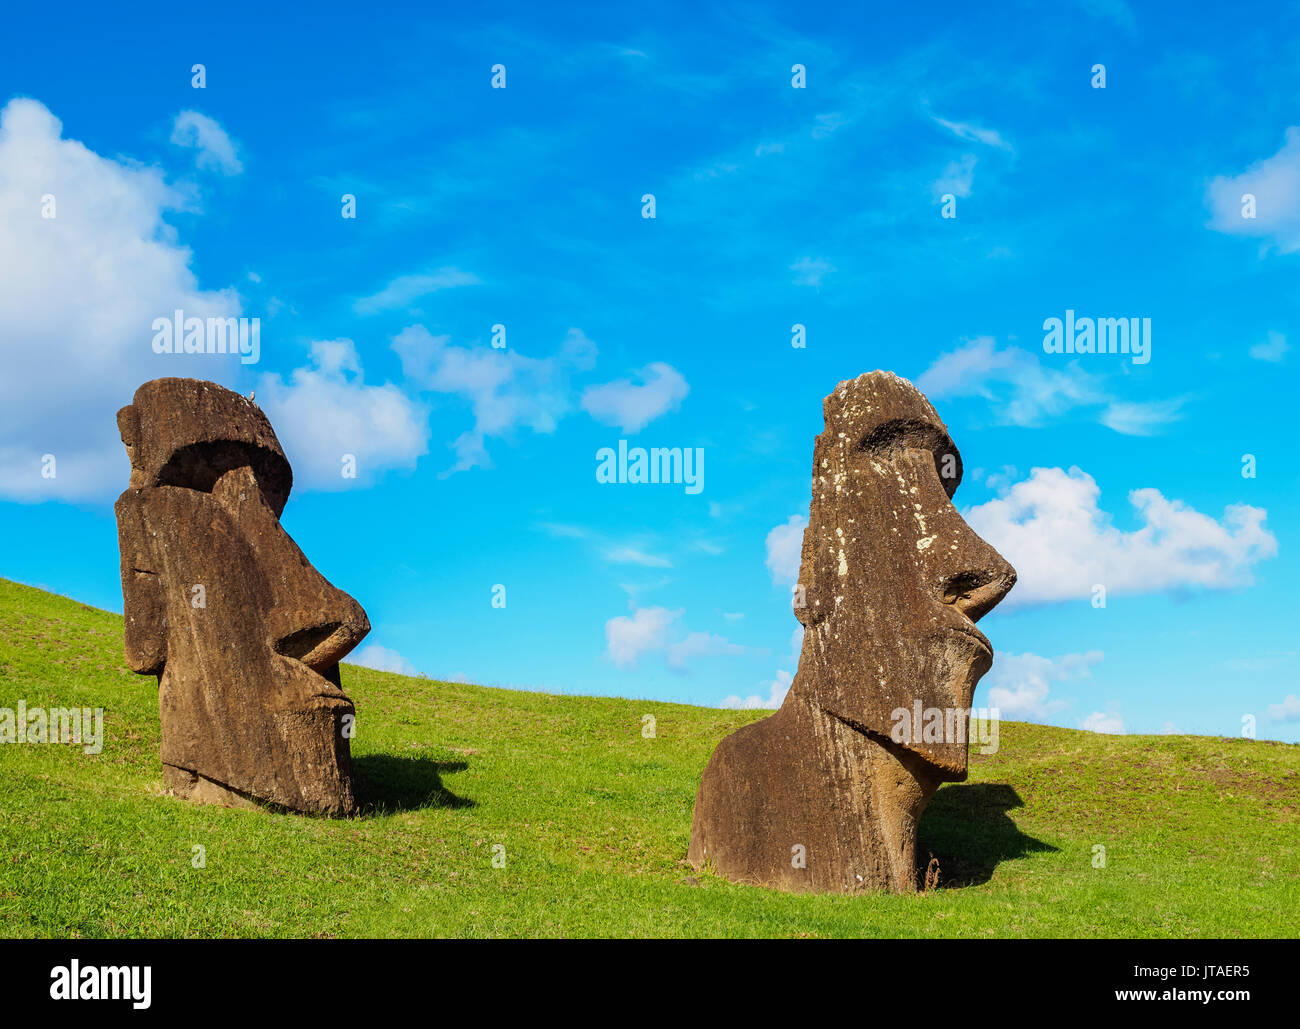 Moais am Steinbruch am Hang des Rano Raraku Vulkans, Nationalpark Rapa Nui, UNESCO, Osterinsel, Chile Stockfoto